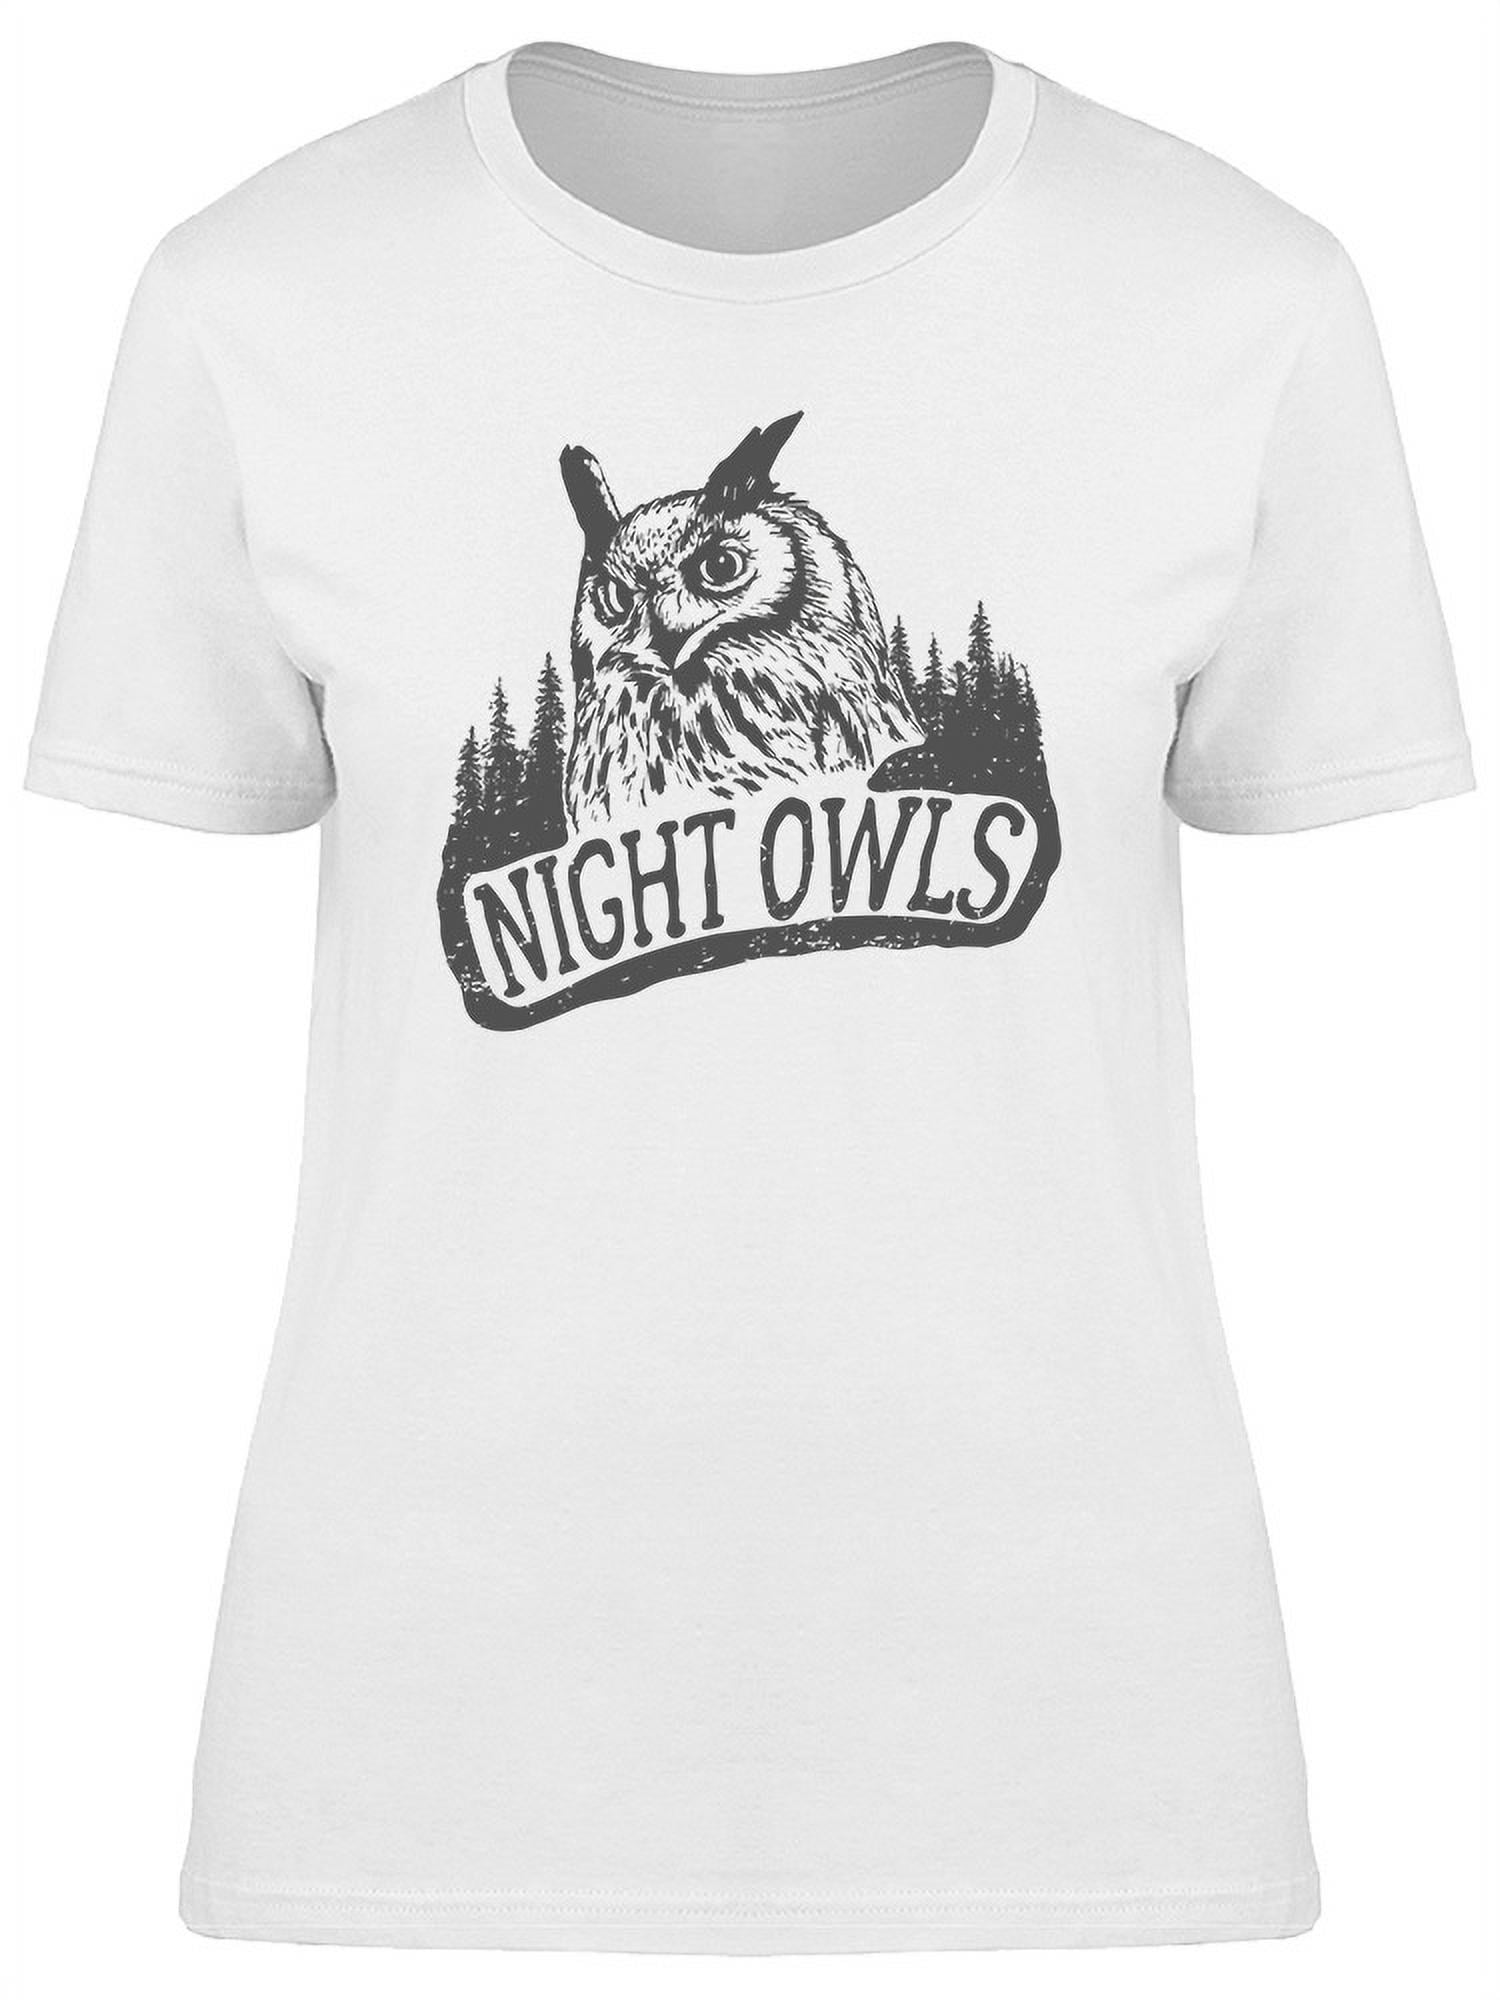 Nite Owl Cute Kid's HEAT PRESS TRANSFER for T Shirt Tote Sweatshirt Fabric #414 